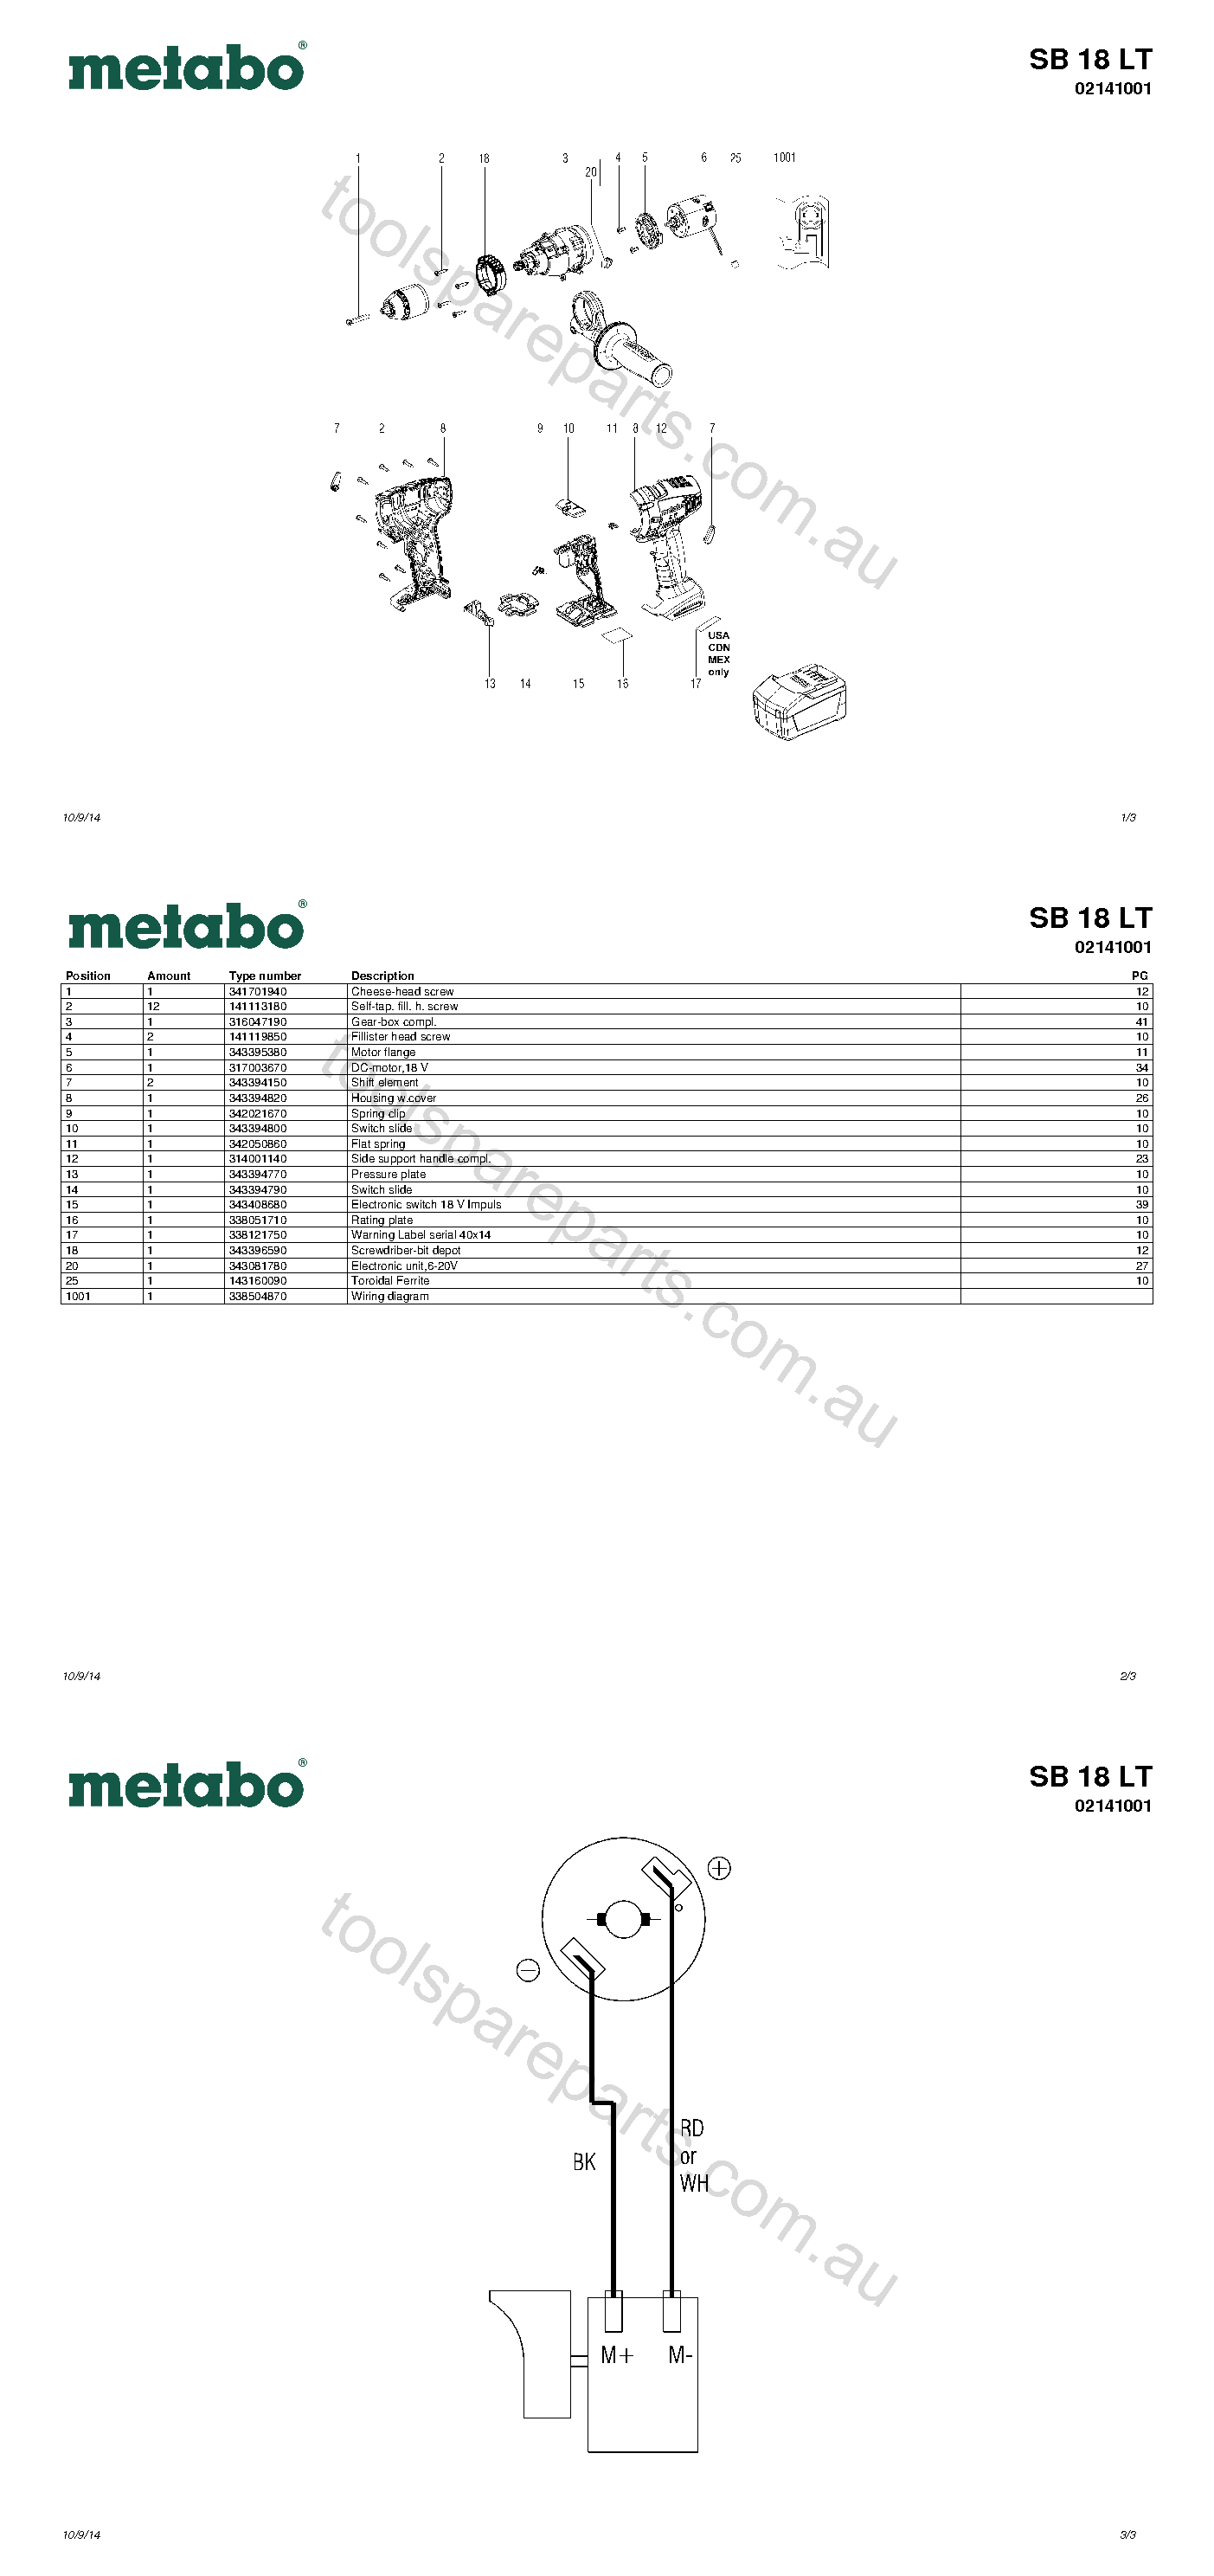 Metabo SB 18 LT 02141001  Diagram 1